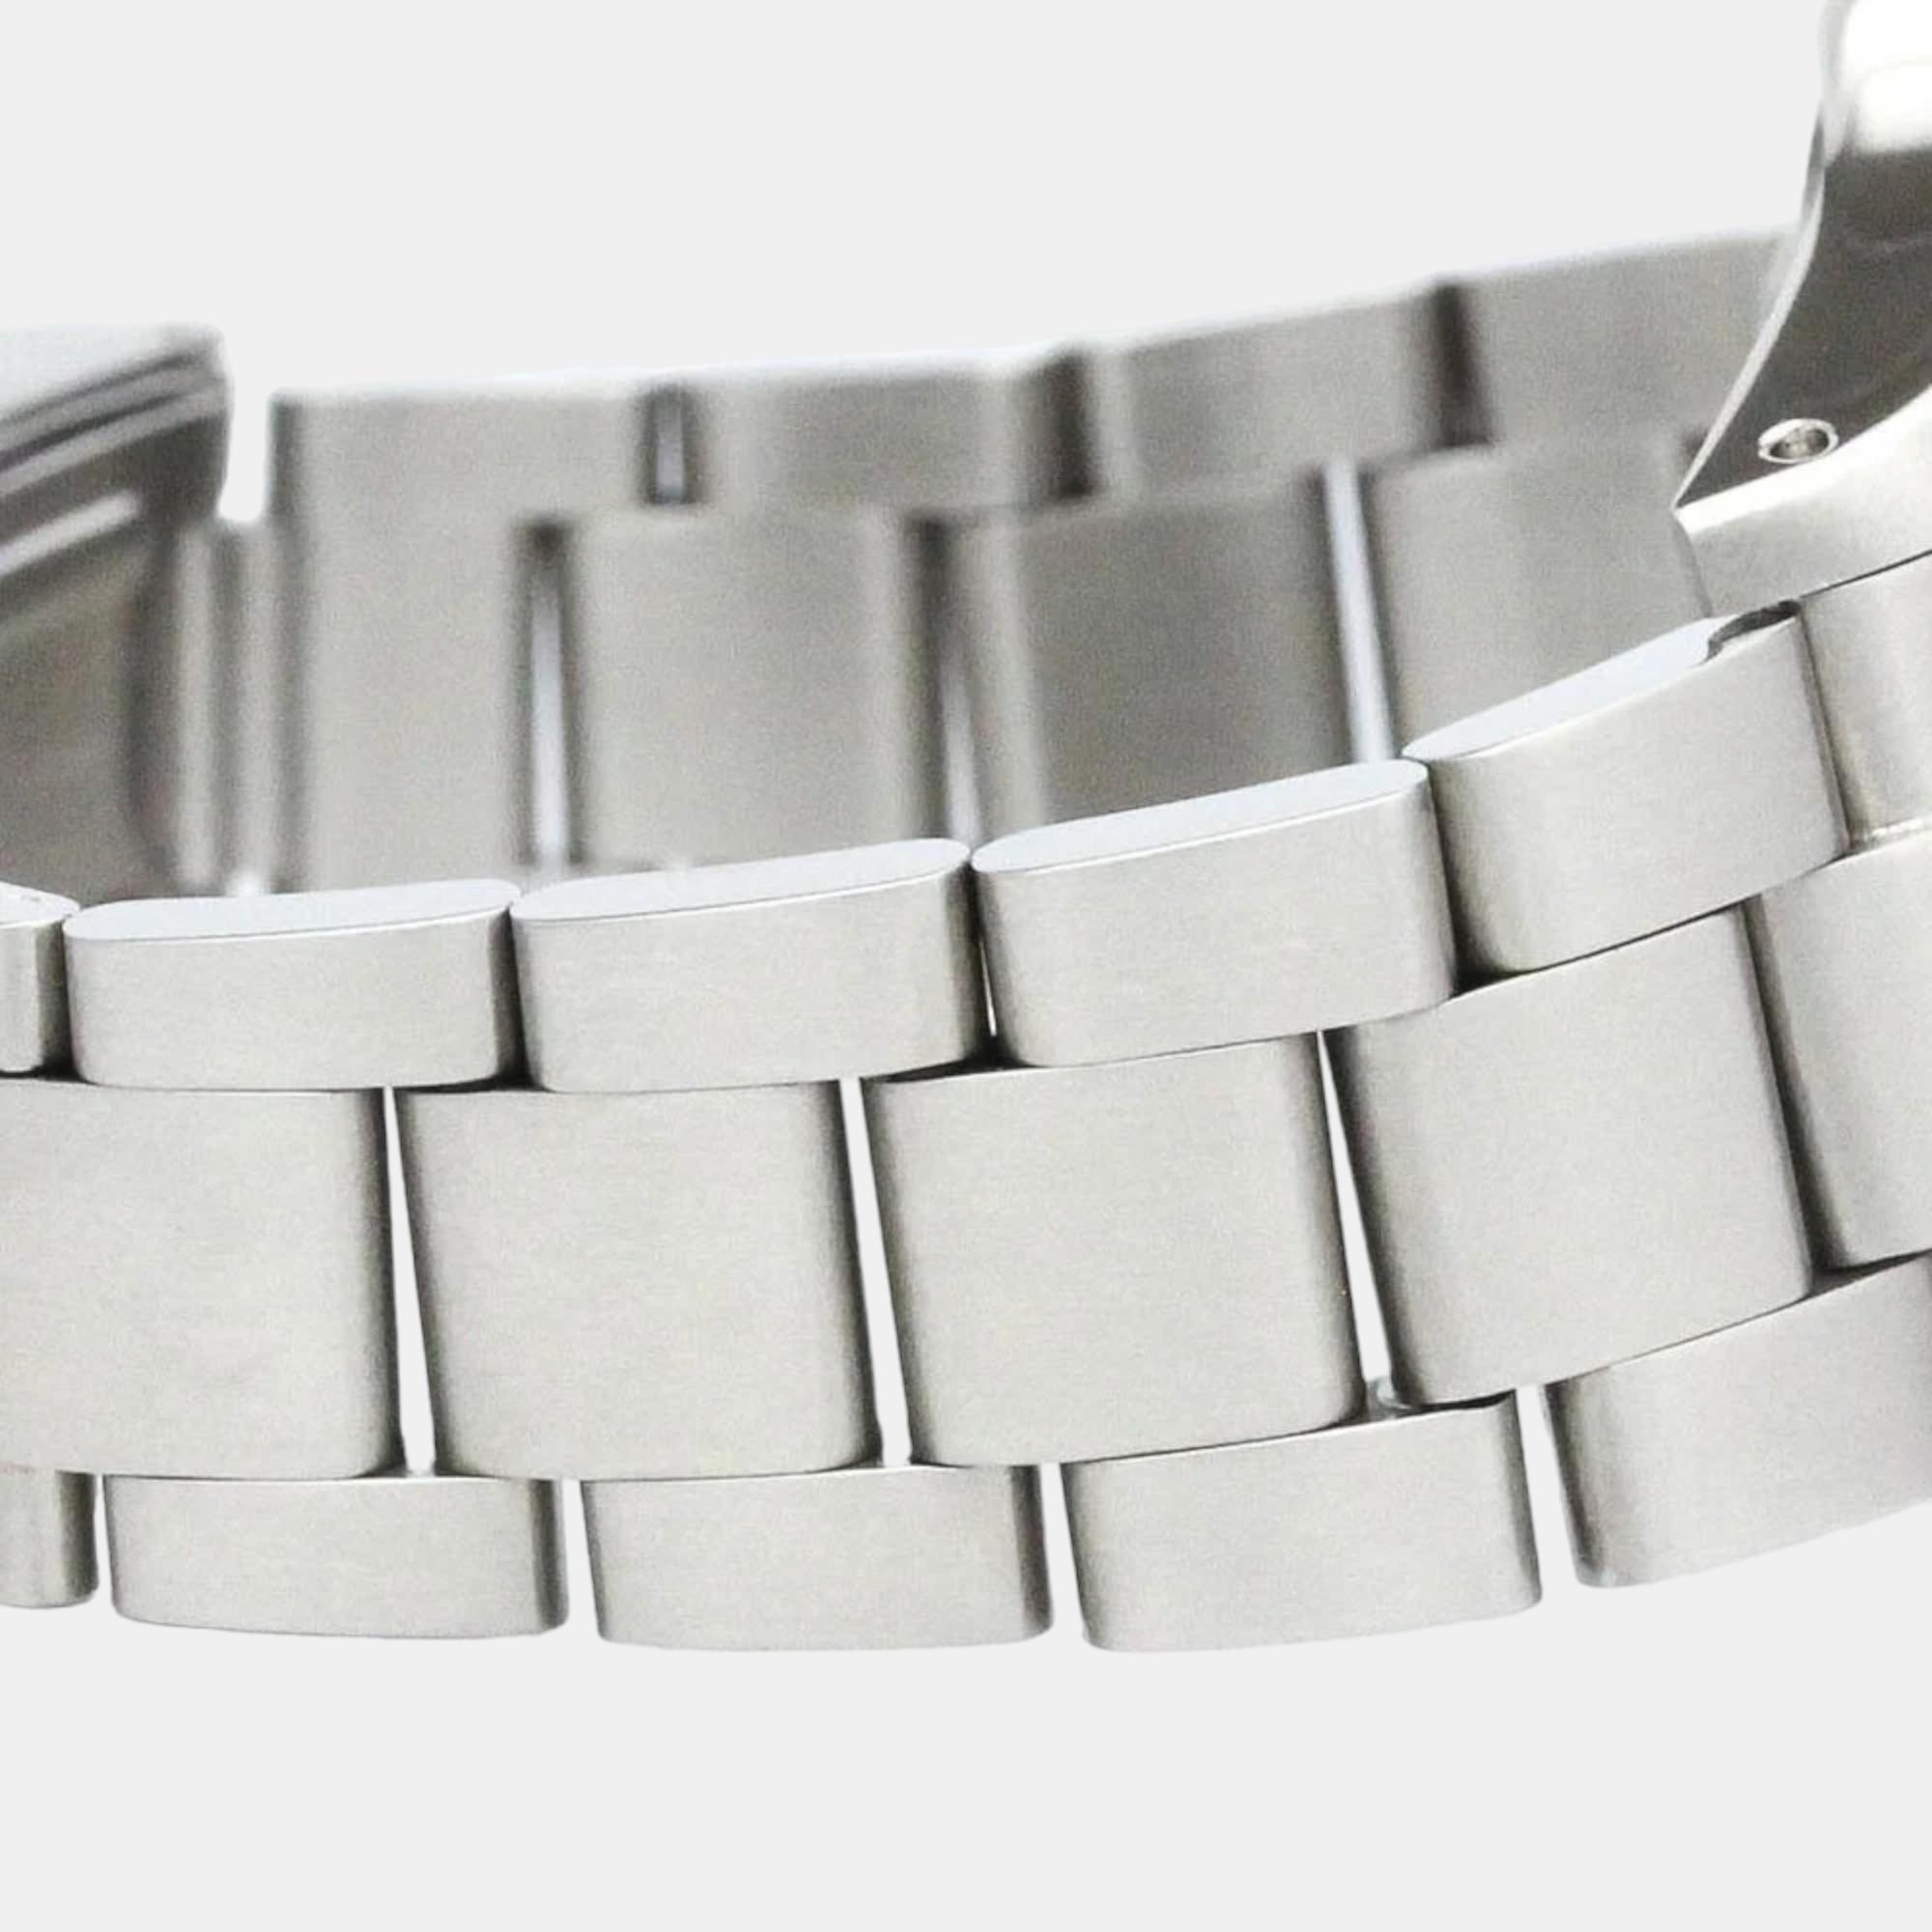 Rolex Black Stainless Steel Sea-Dweller 16660 Automatic Men's Wristwatch 40 Mm